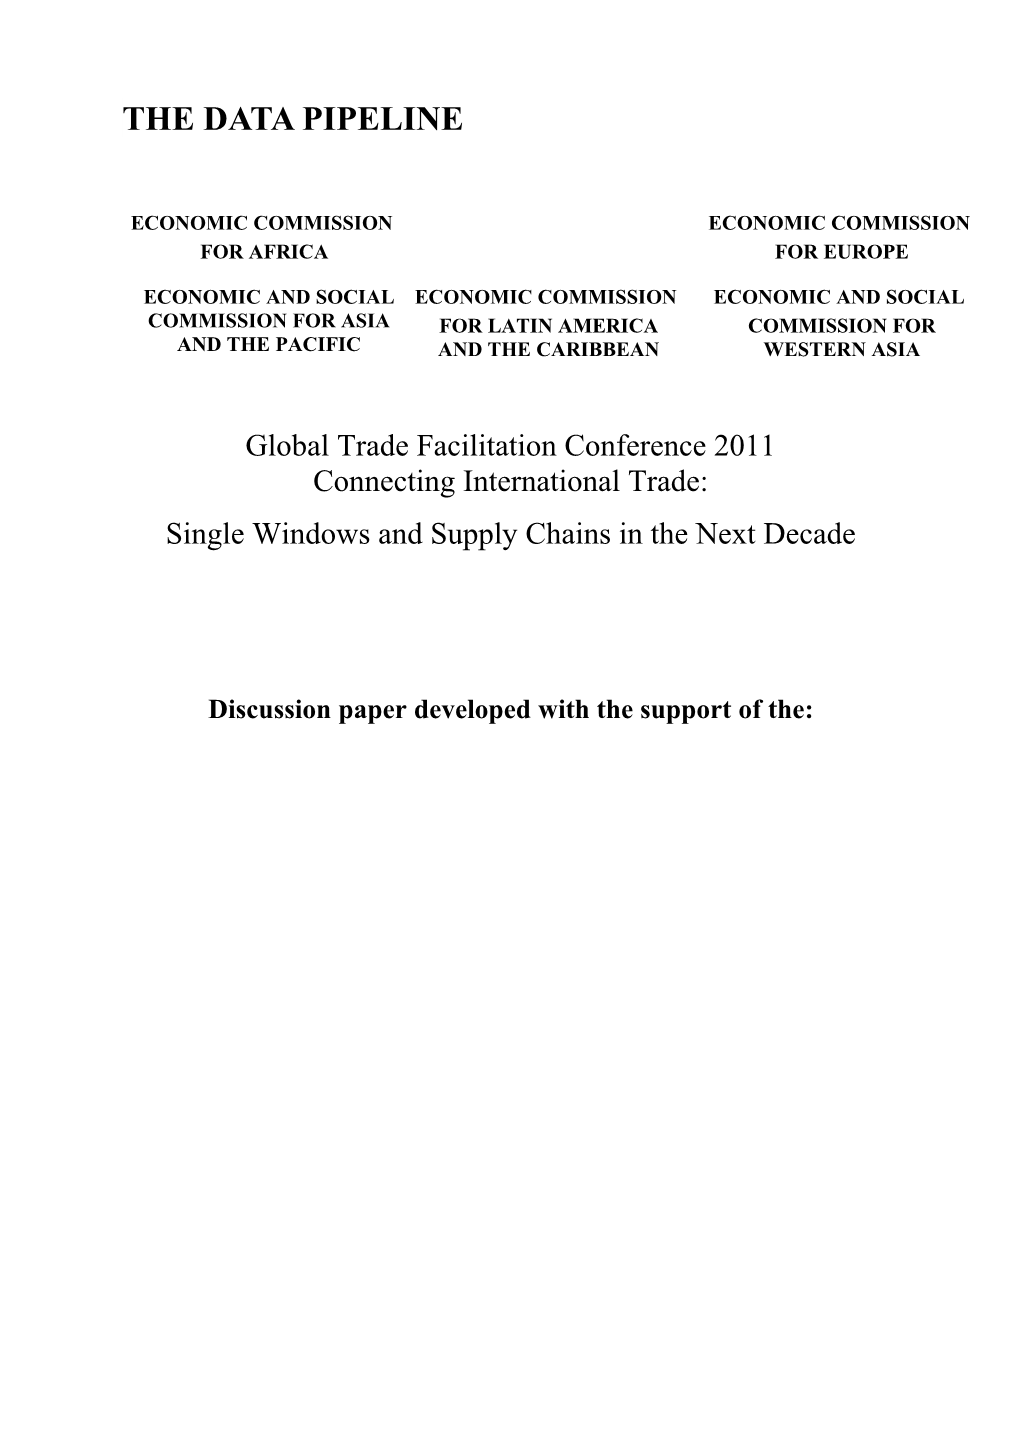 Global Trade Facilitation Conference 2011